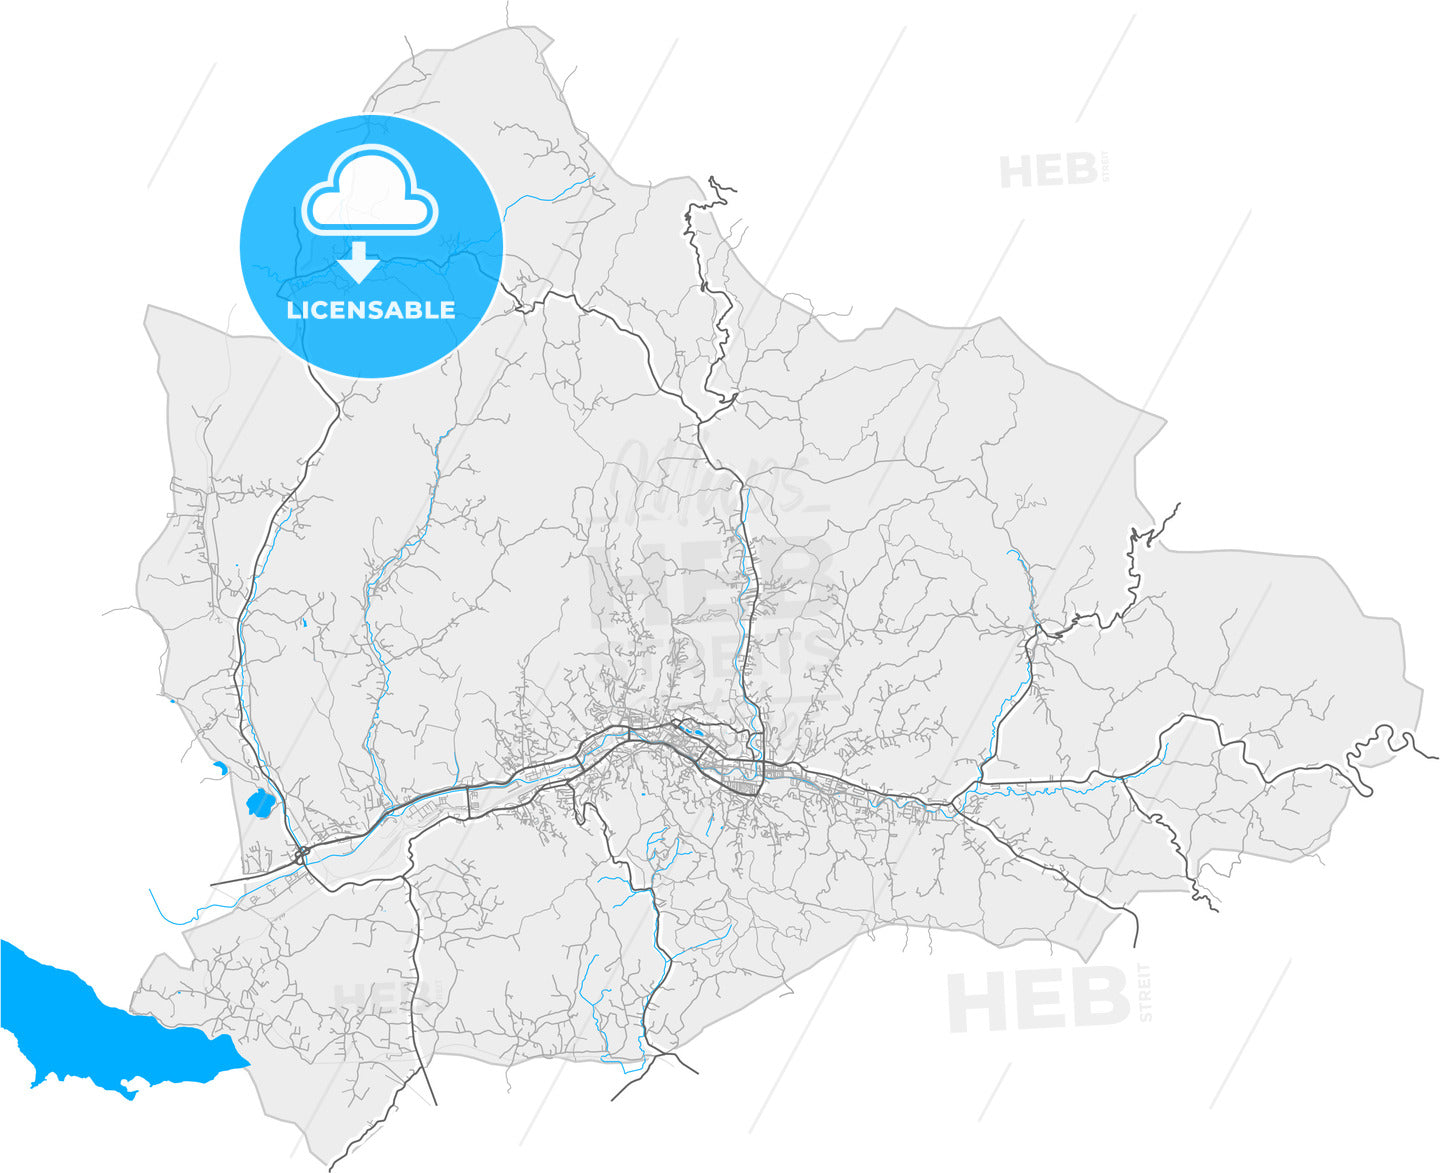 City of Tuzla, Tuzla Canton, Bosnia and Herzegovina, high quality vector map